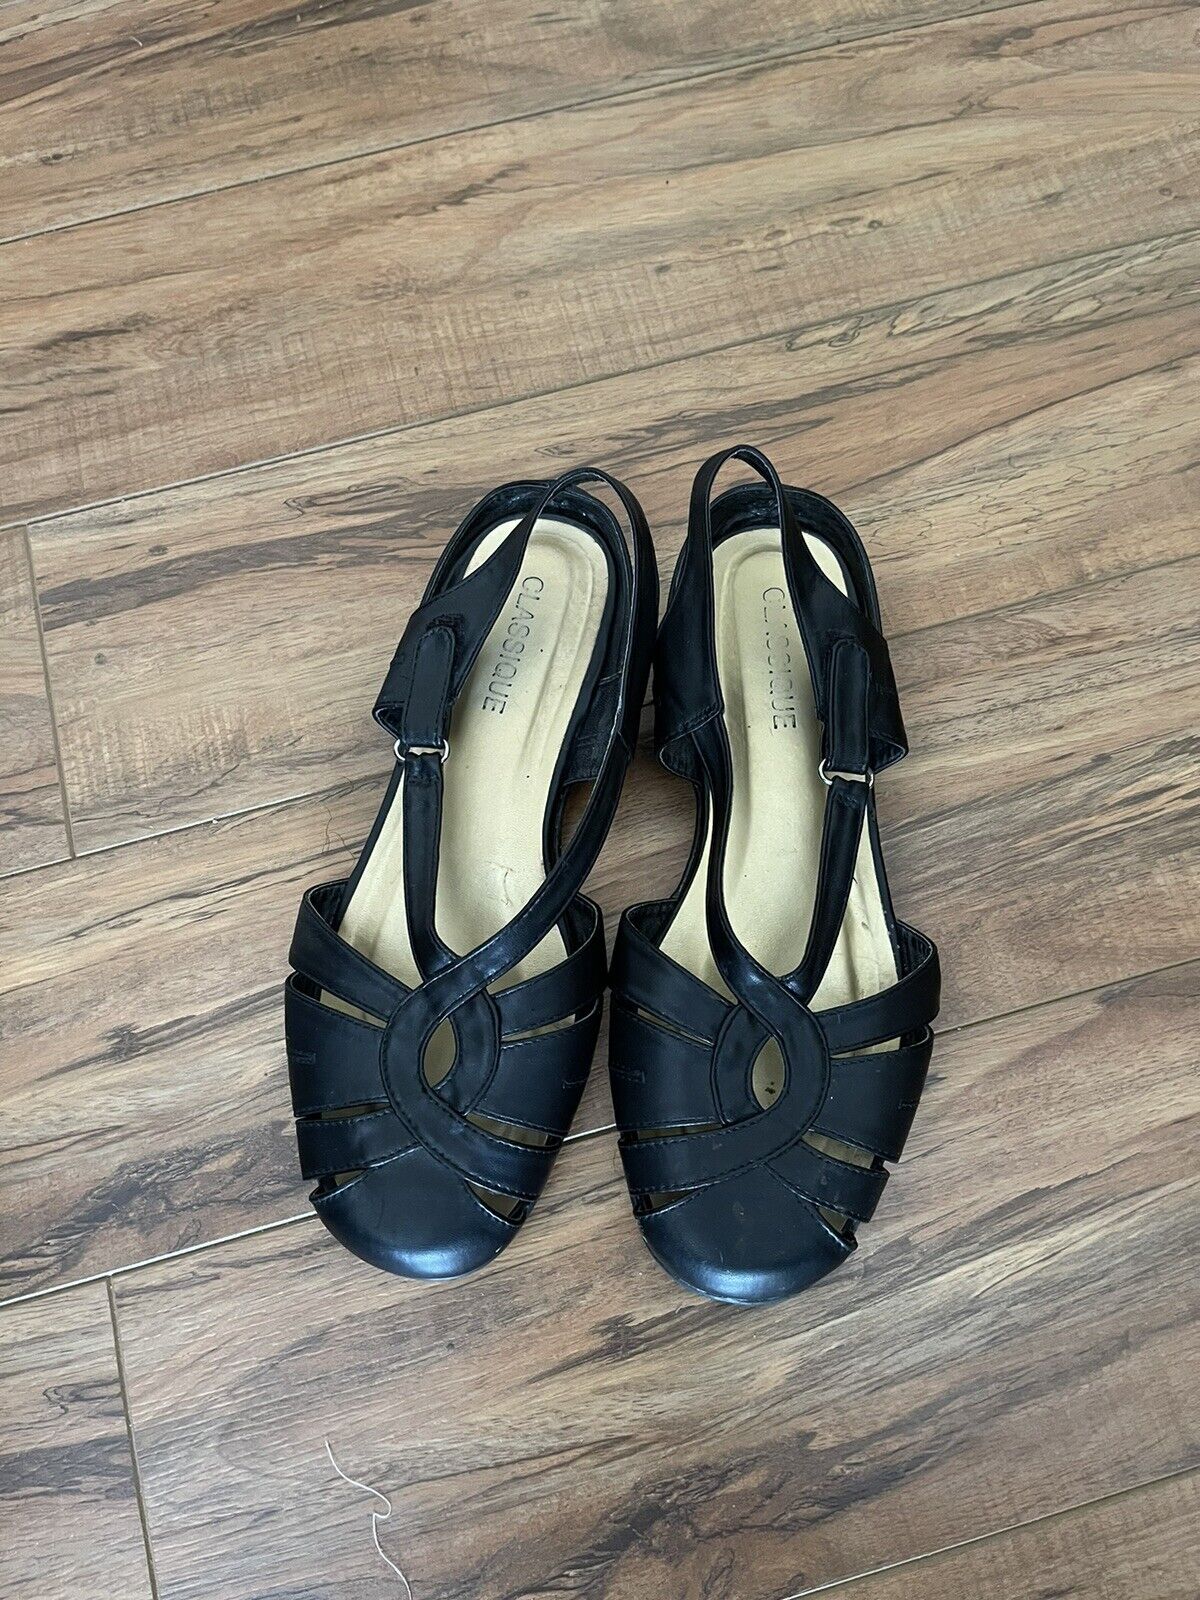 Classified Sling back Black Flats Shoes Slip On Size91/2-DWidth